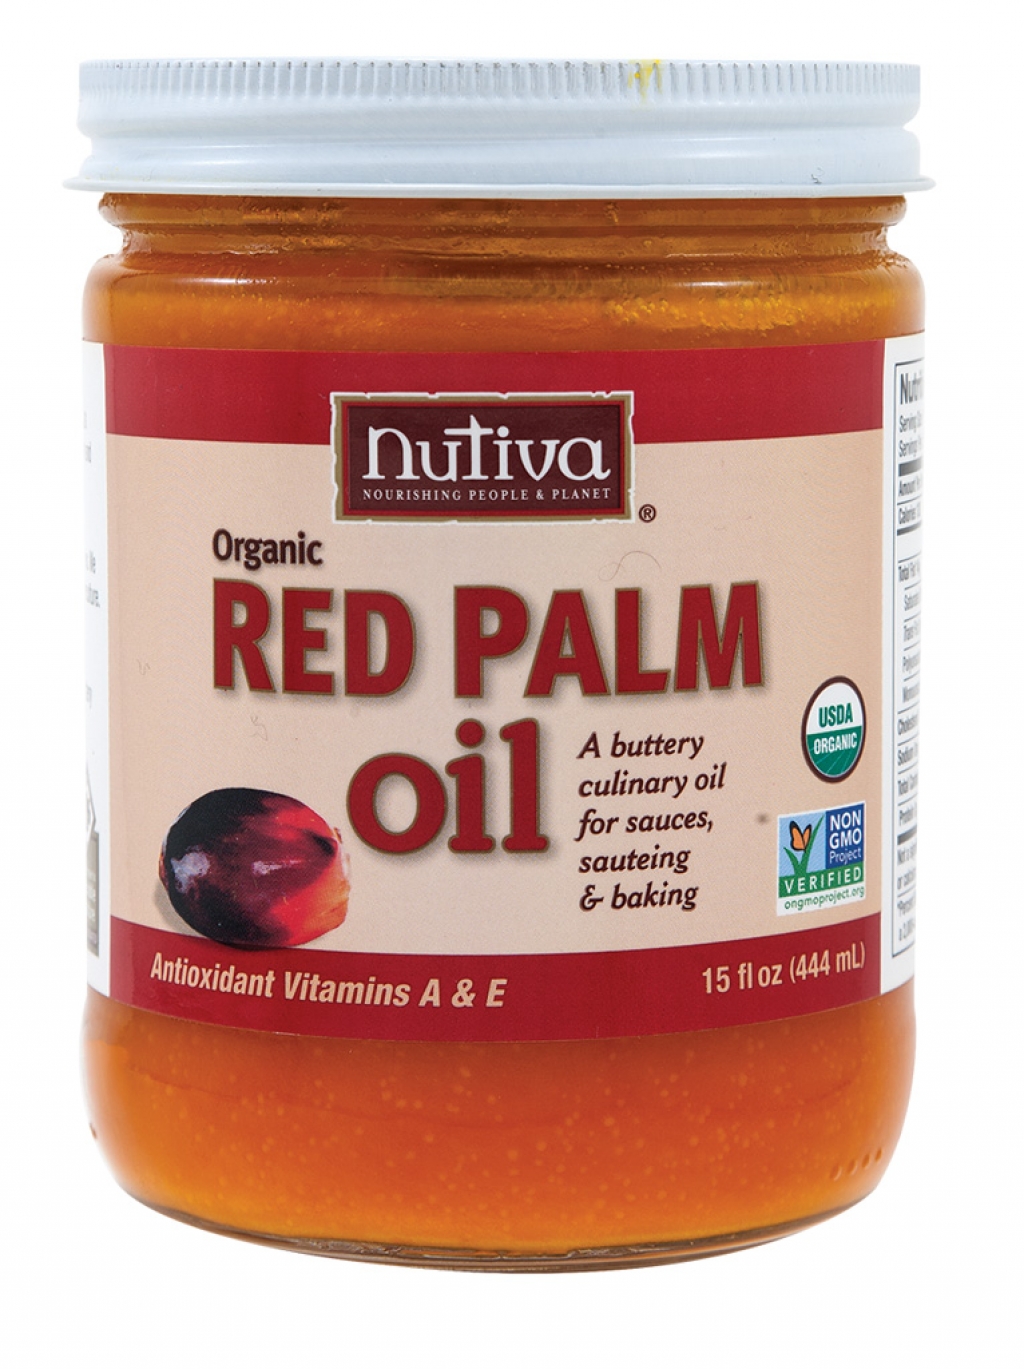 Nutiva’s Organic Red Palm Oil